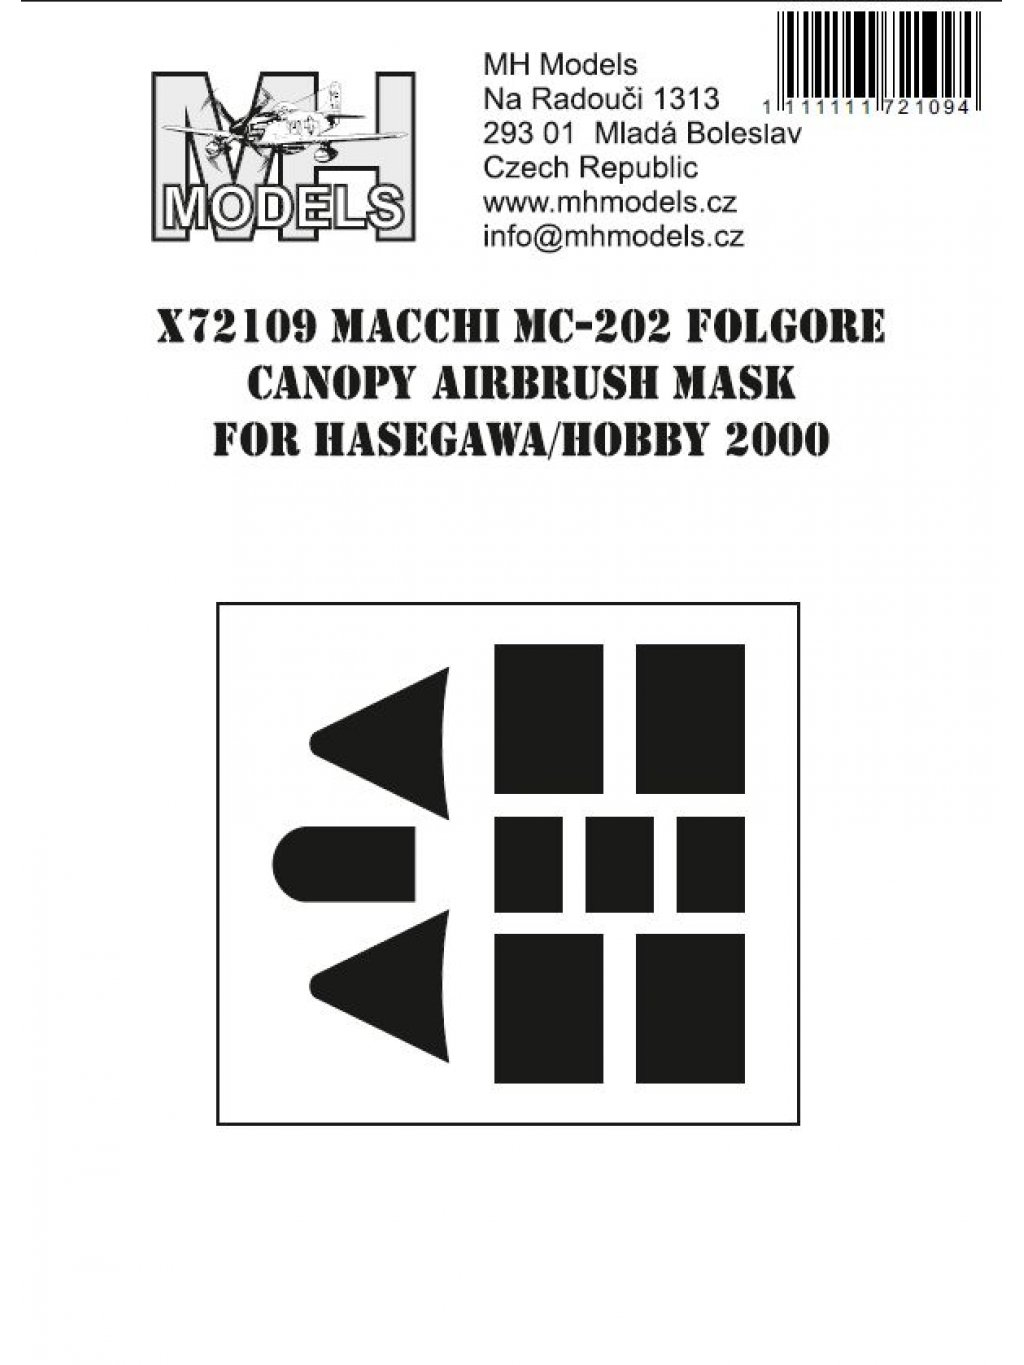 Macchi MC-202 Folgore canopy airbrush mask for Hasegawa/Hobby2000